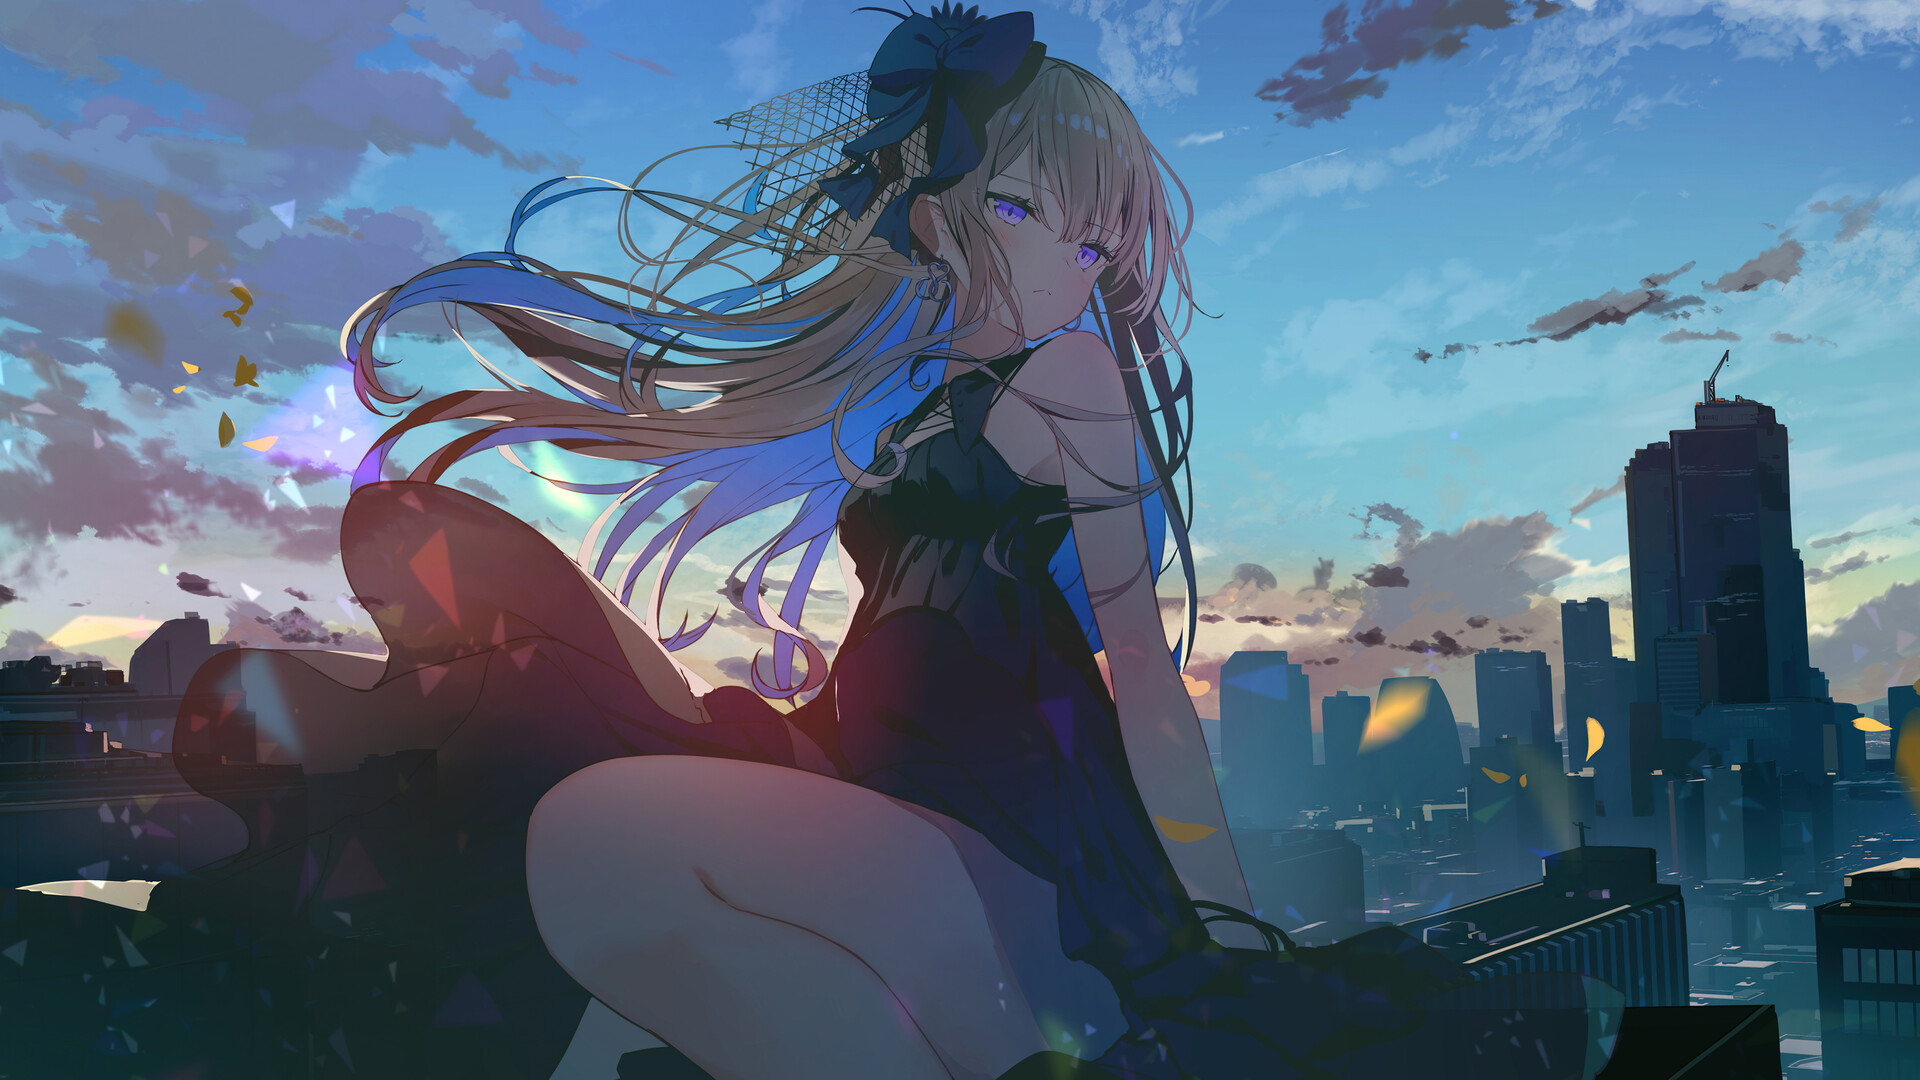 Anime 1920x1080 anime girls long hair blonde purple eyes dress black dress city building sky sunrise looking away clouds